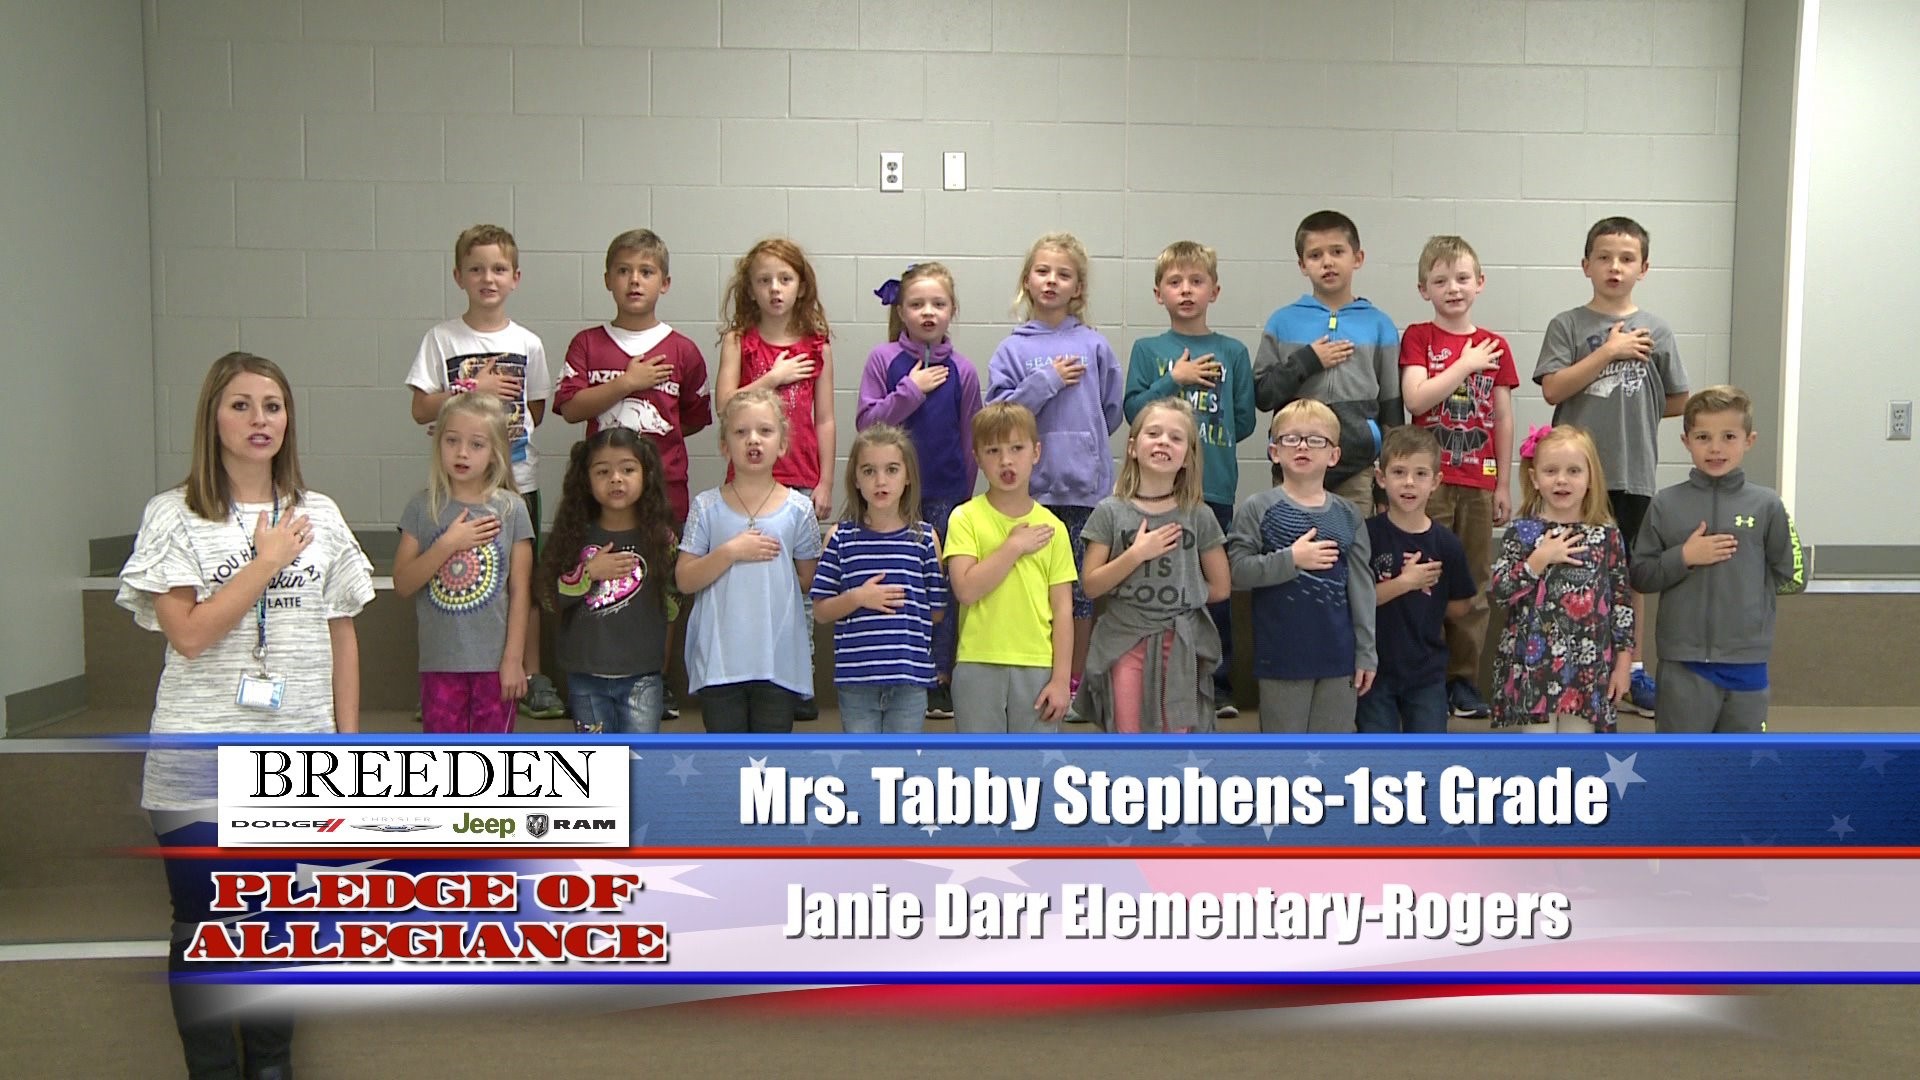 Mrs. Tabby Stephens  1st Grade  Janie Oarr Elementary - Rogers